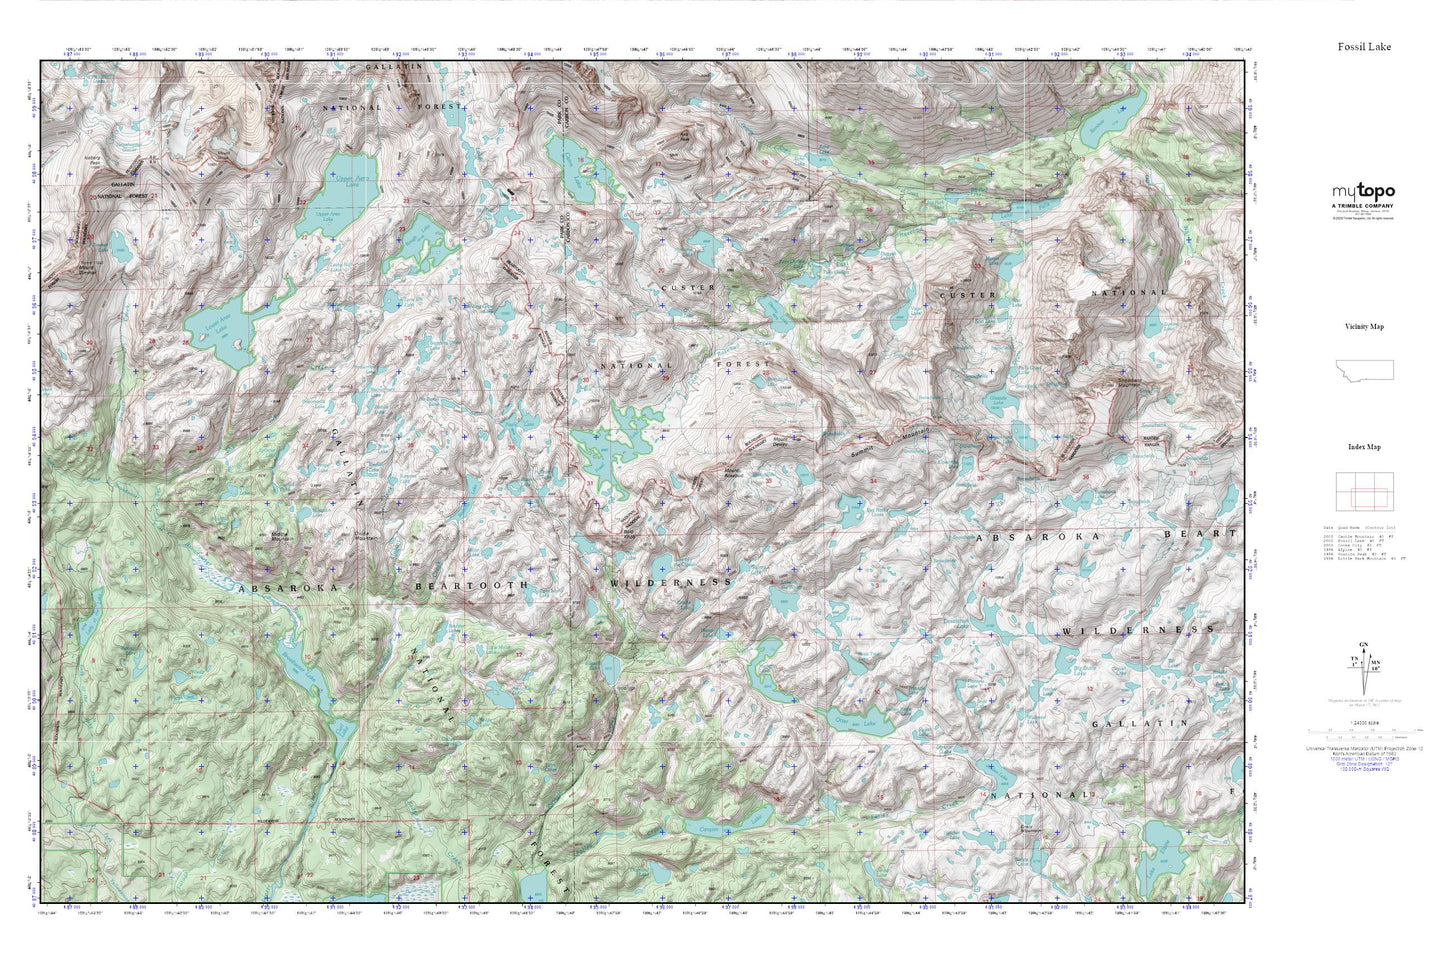 Fossil Lake MyTopo Explorer Series Map Image